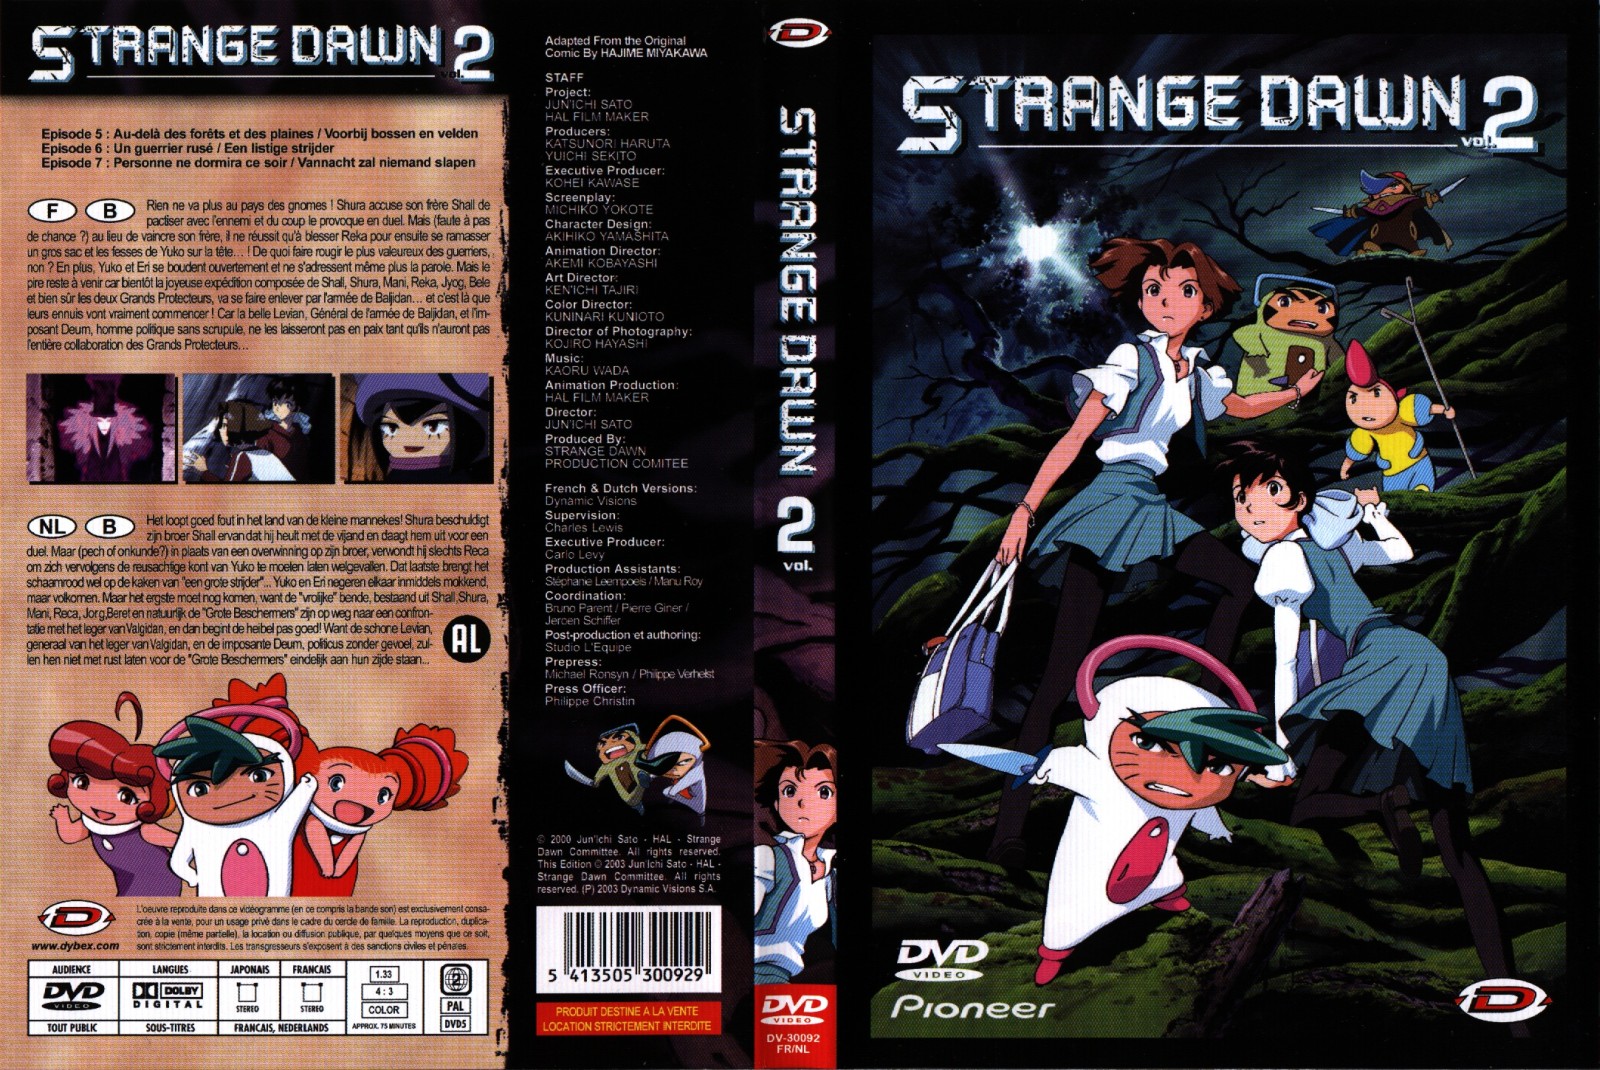 Jaquette DVD Strange dawn vol 2